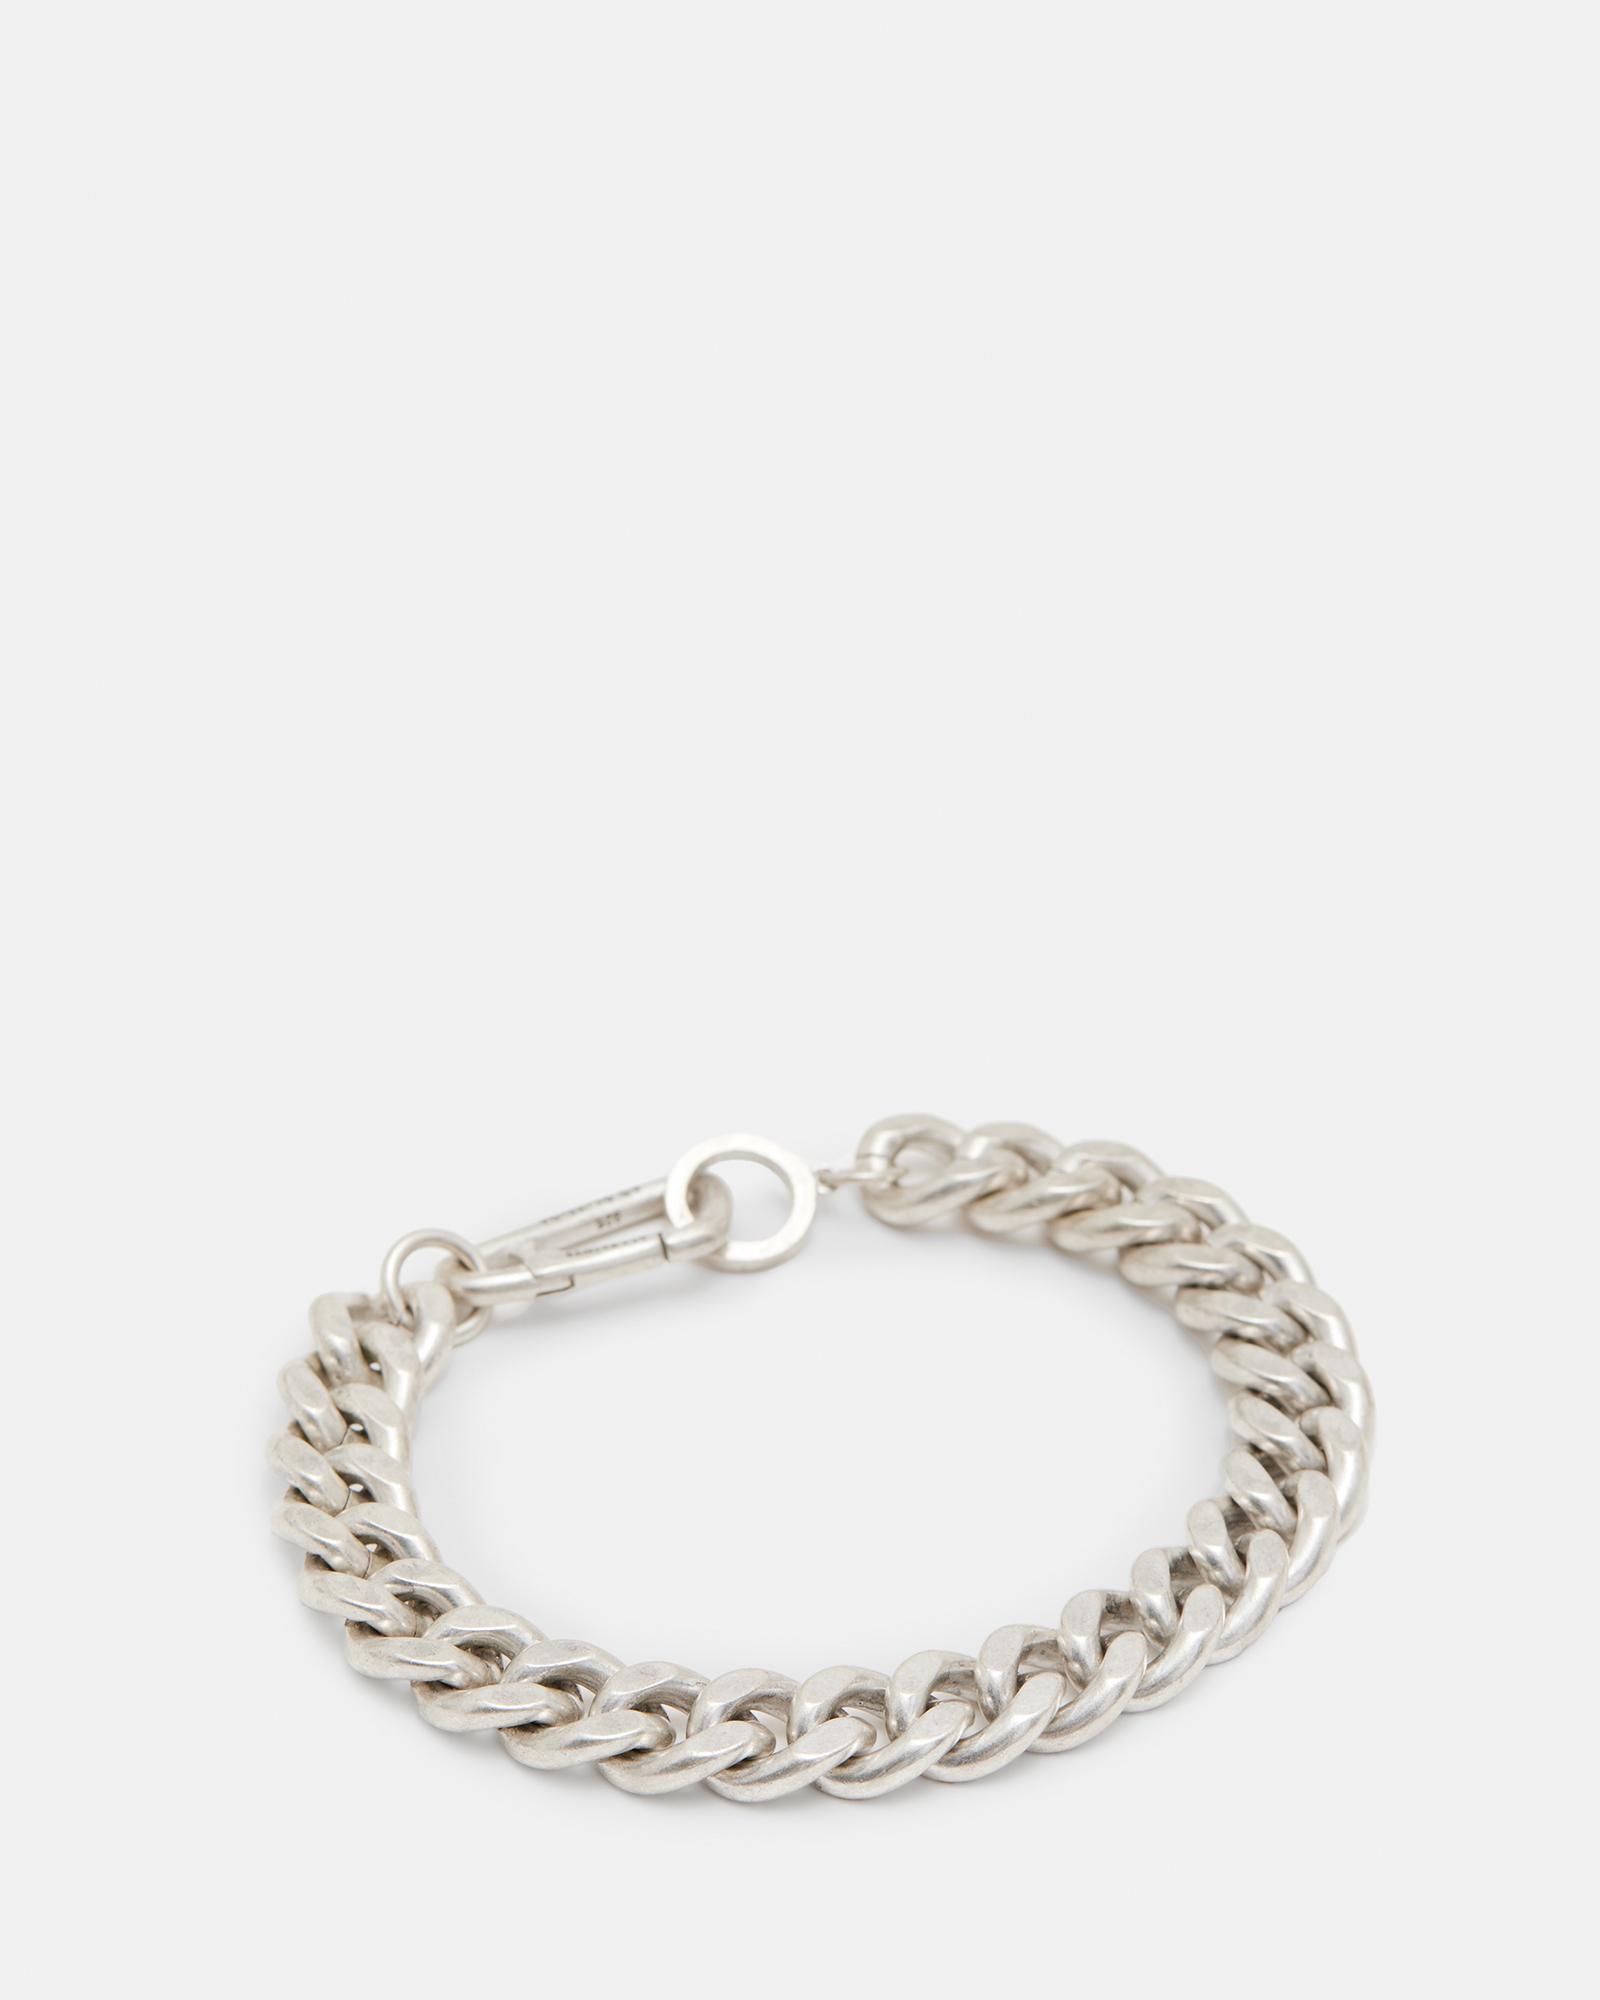 Men's Carabiner Clasp Chain Bracelet